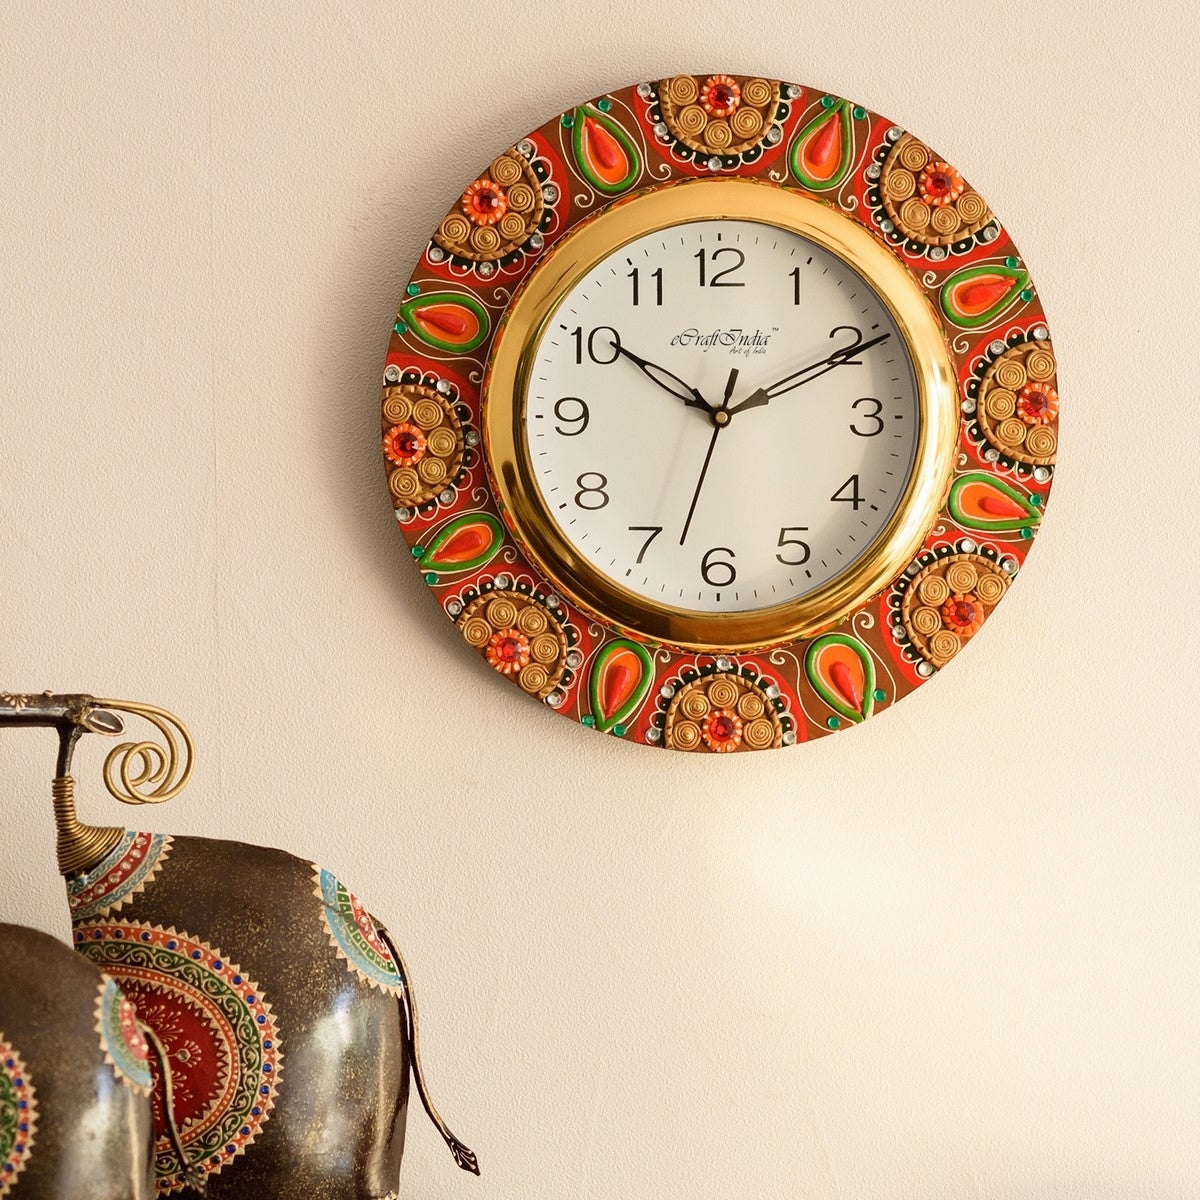 Crystal Studded Embellish Handicrafted Round Shape Papier-Mache Wooden Wall Clock 1